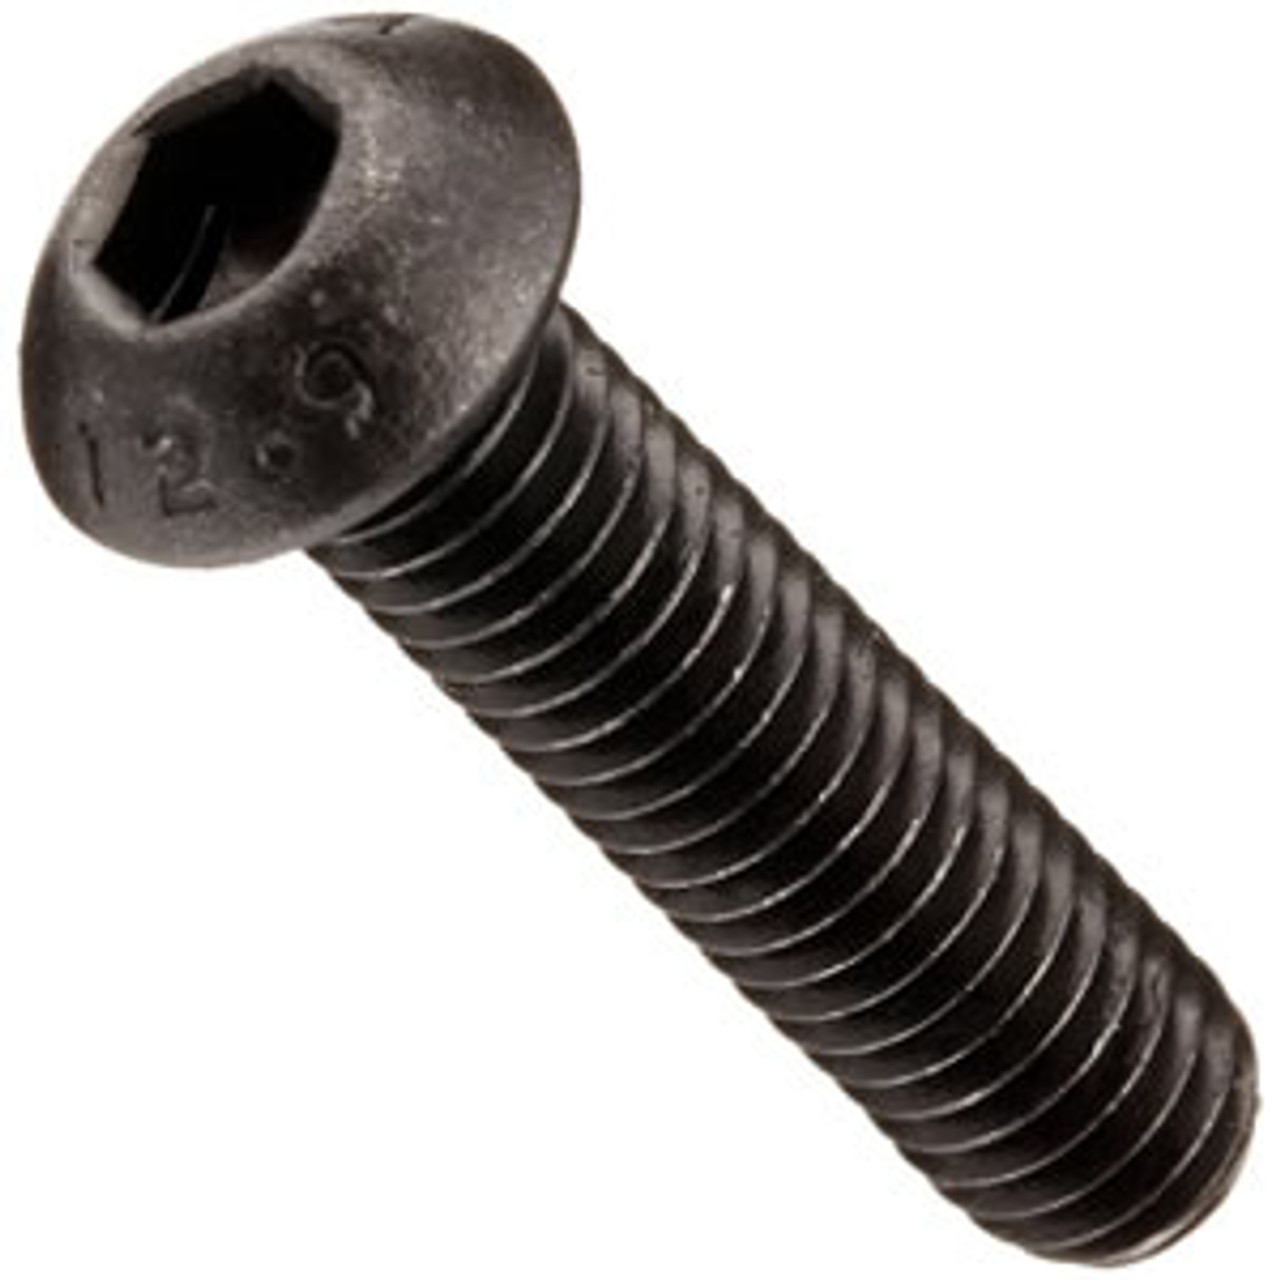 M2-0.40 Metric Button Socket Head Cap Screw - Black Oxide  535001 - 535015